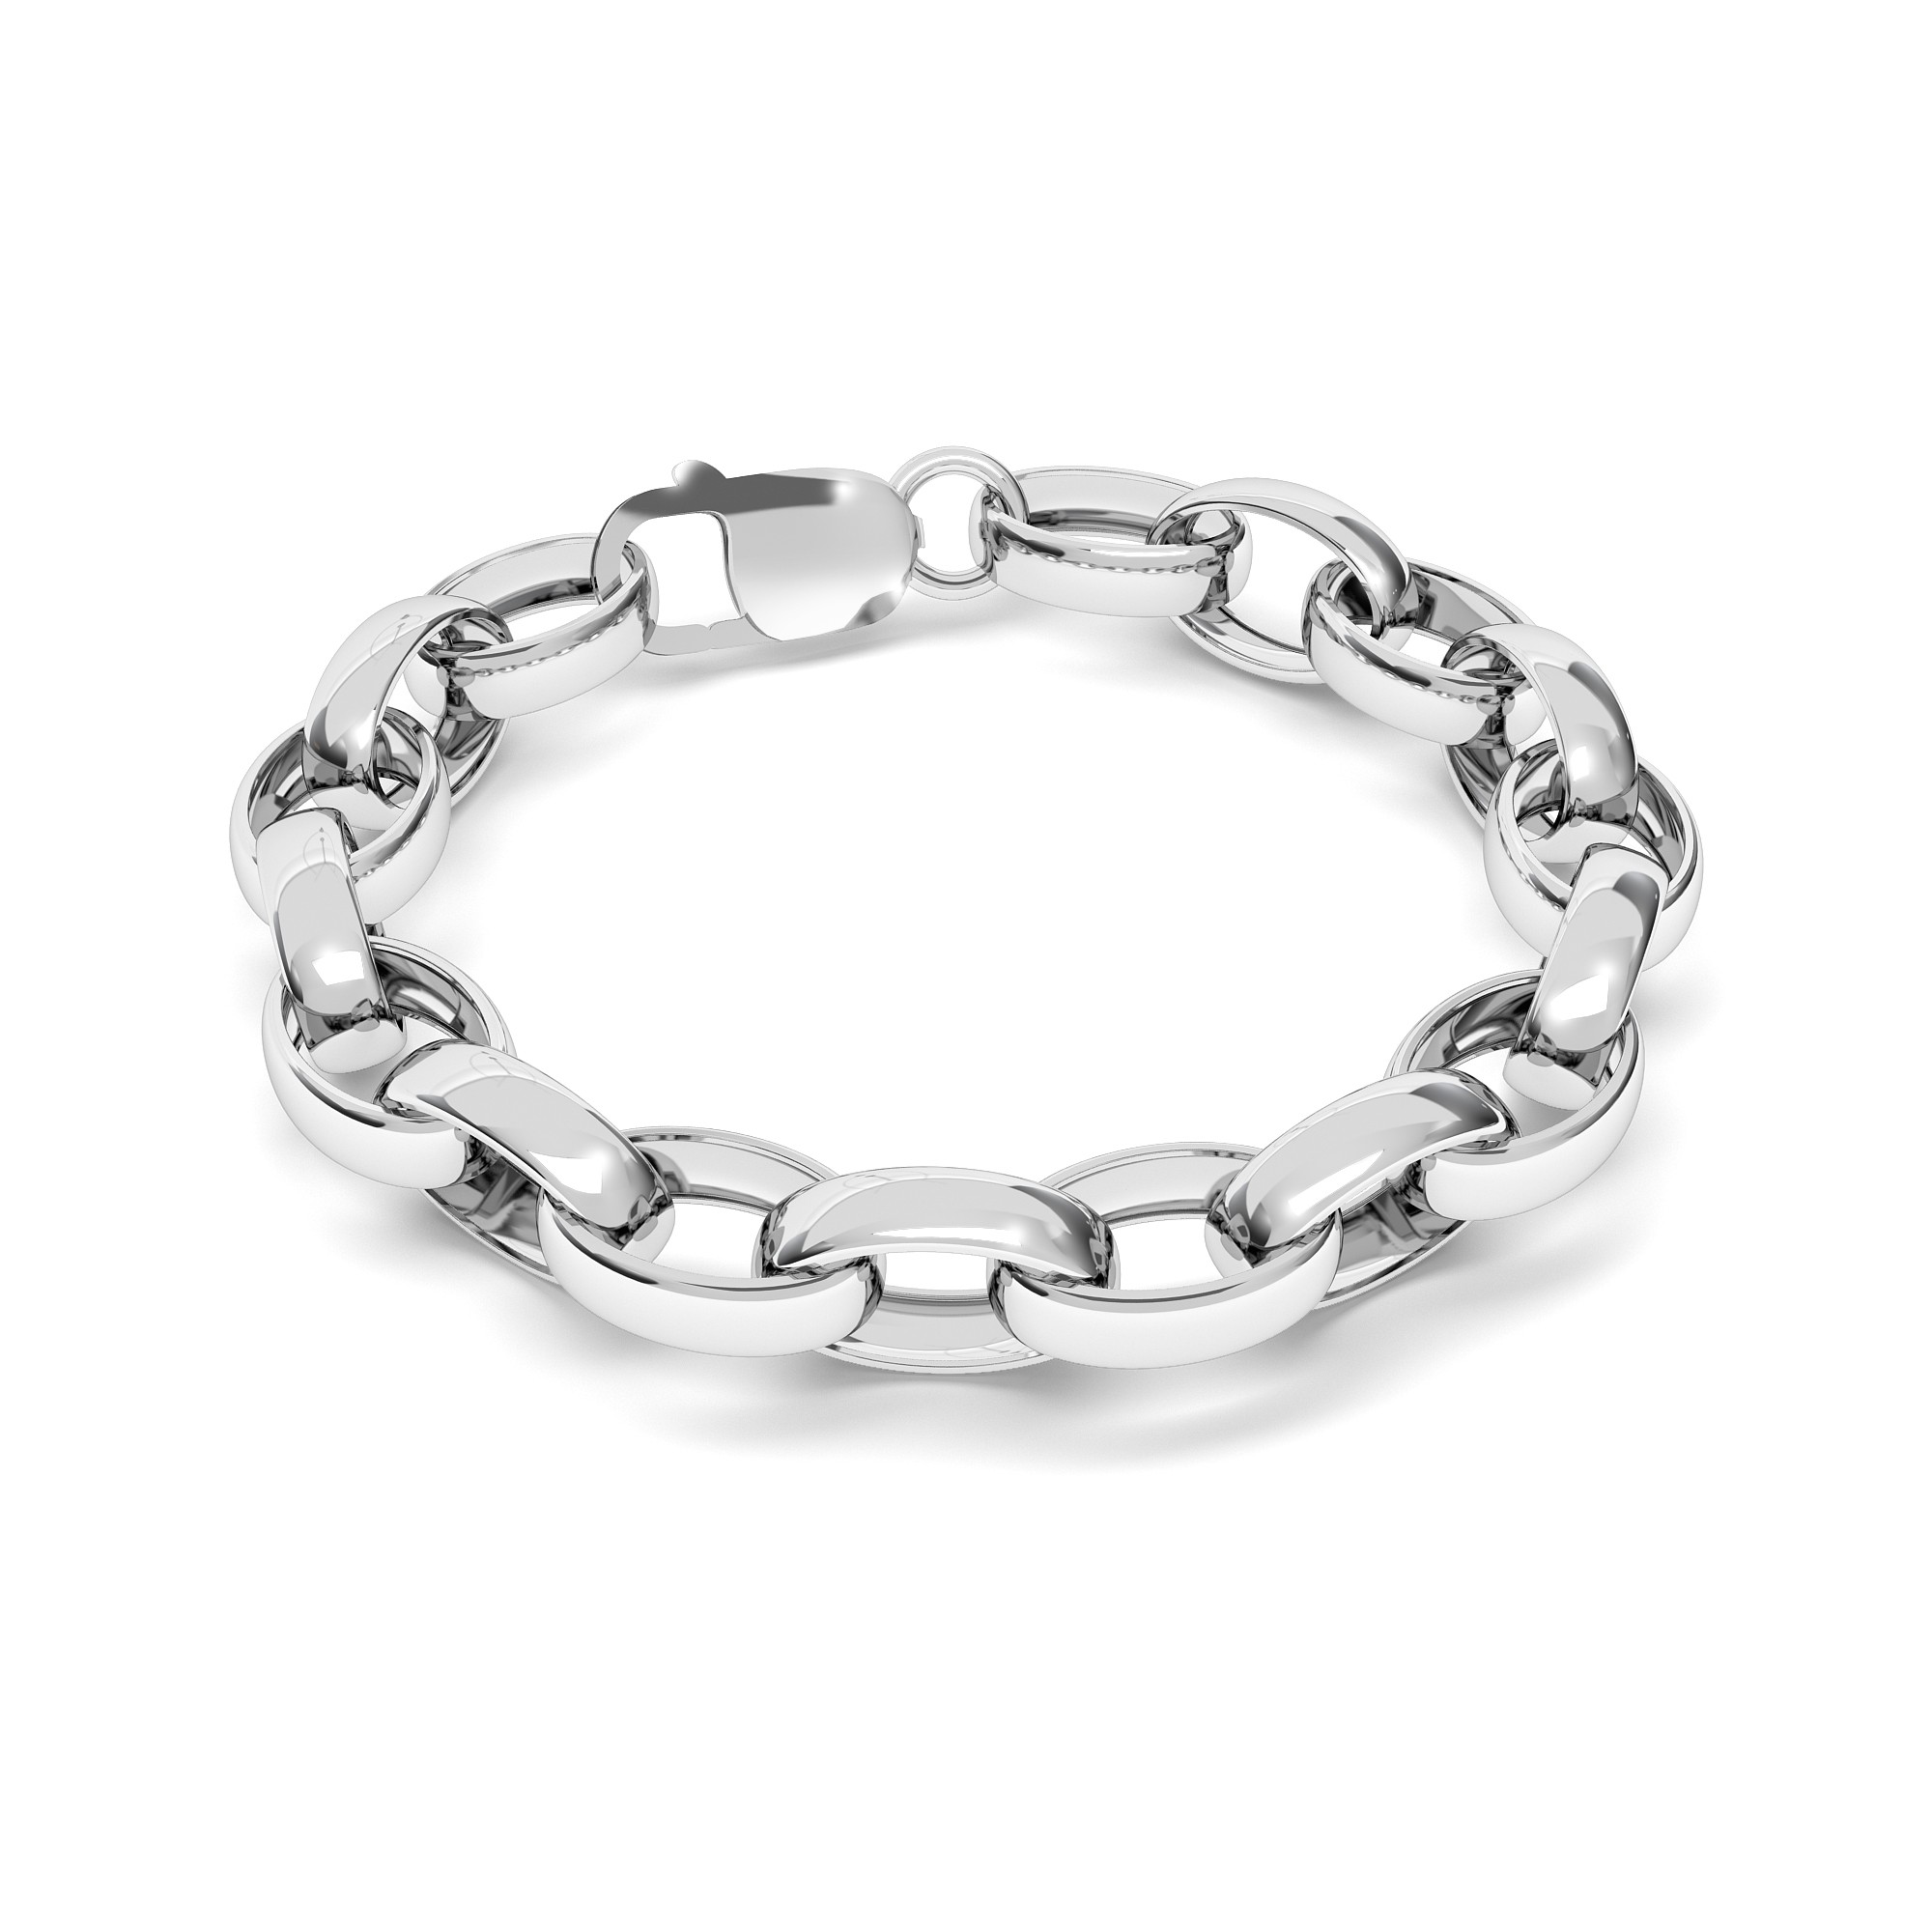 Sterling silver bracelet 925